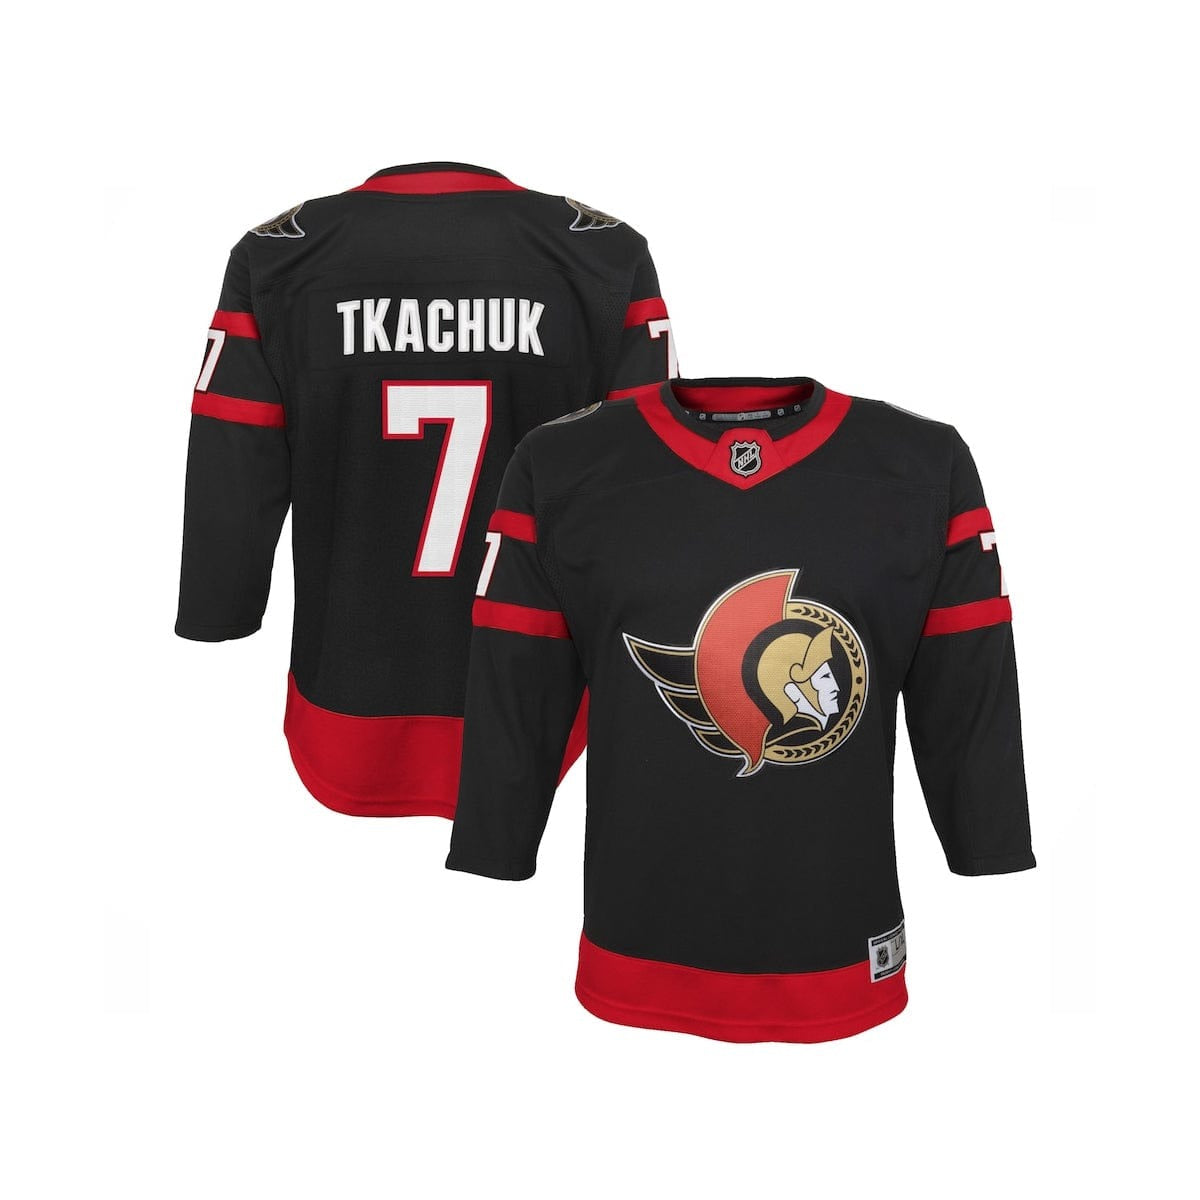 Brady Tkachuk Jerseys, Brady Tkachuk Shirt, NHL Brady Tkachuk Gear &  Merchandise